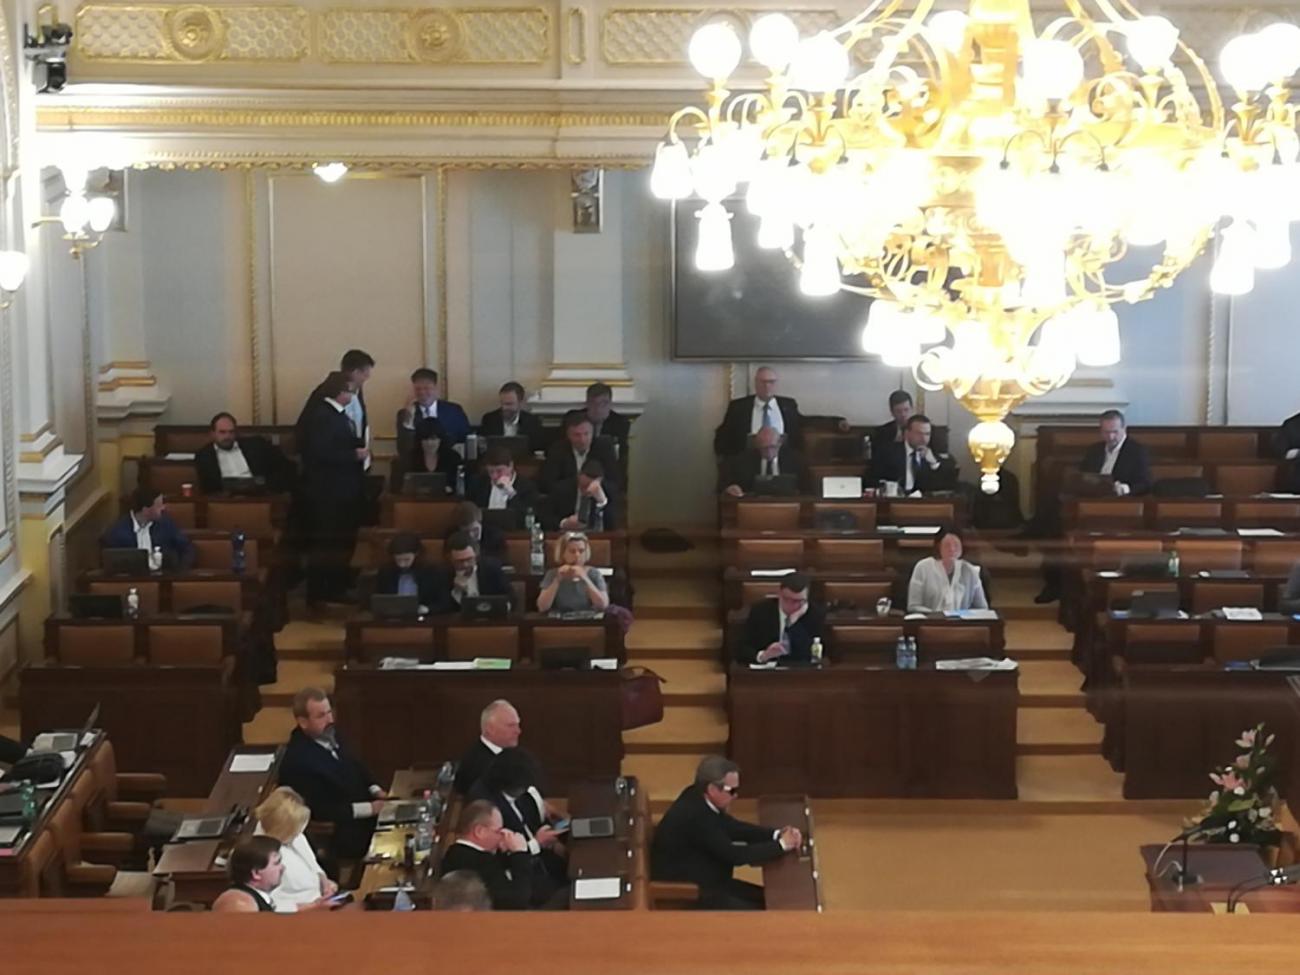 Exkurze v parlamentu ČR